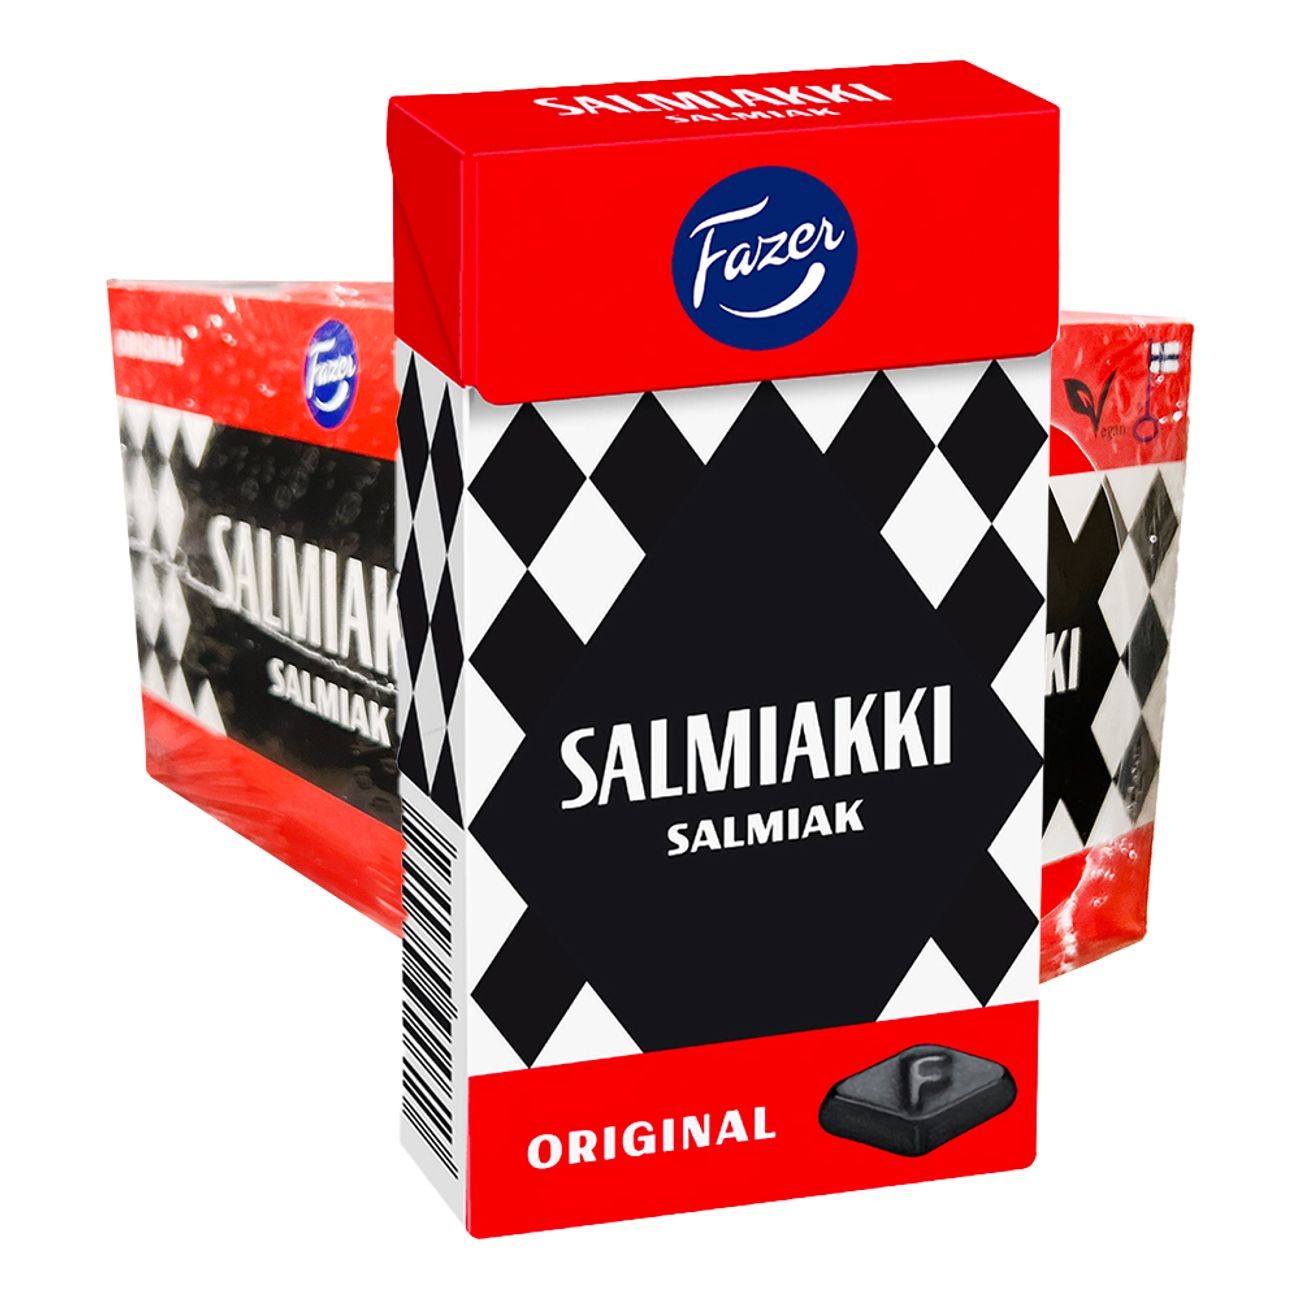 salmiakki-pastiller-storpack-101809-2